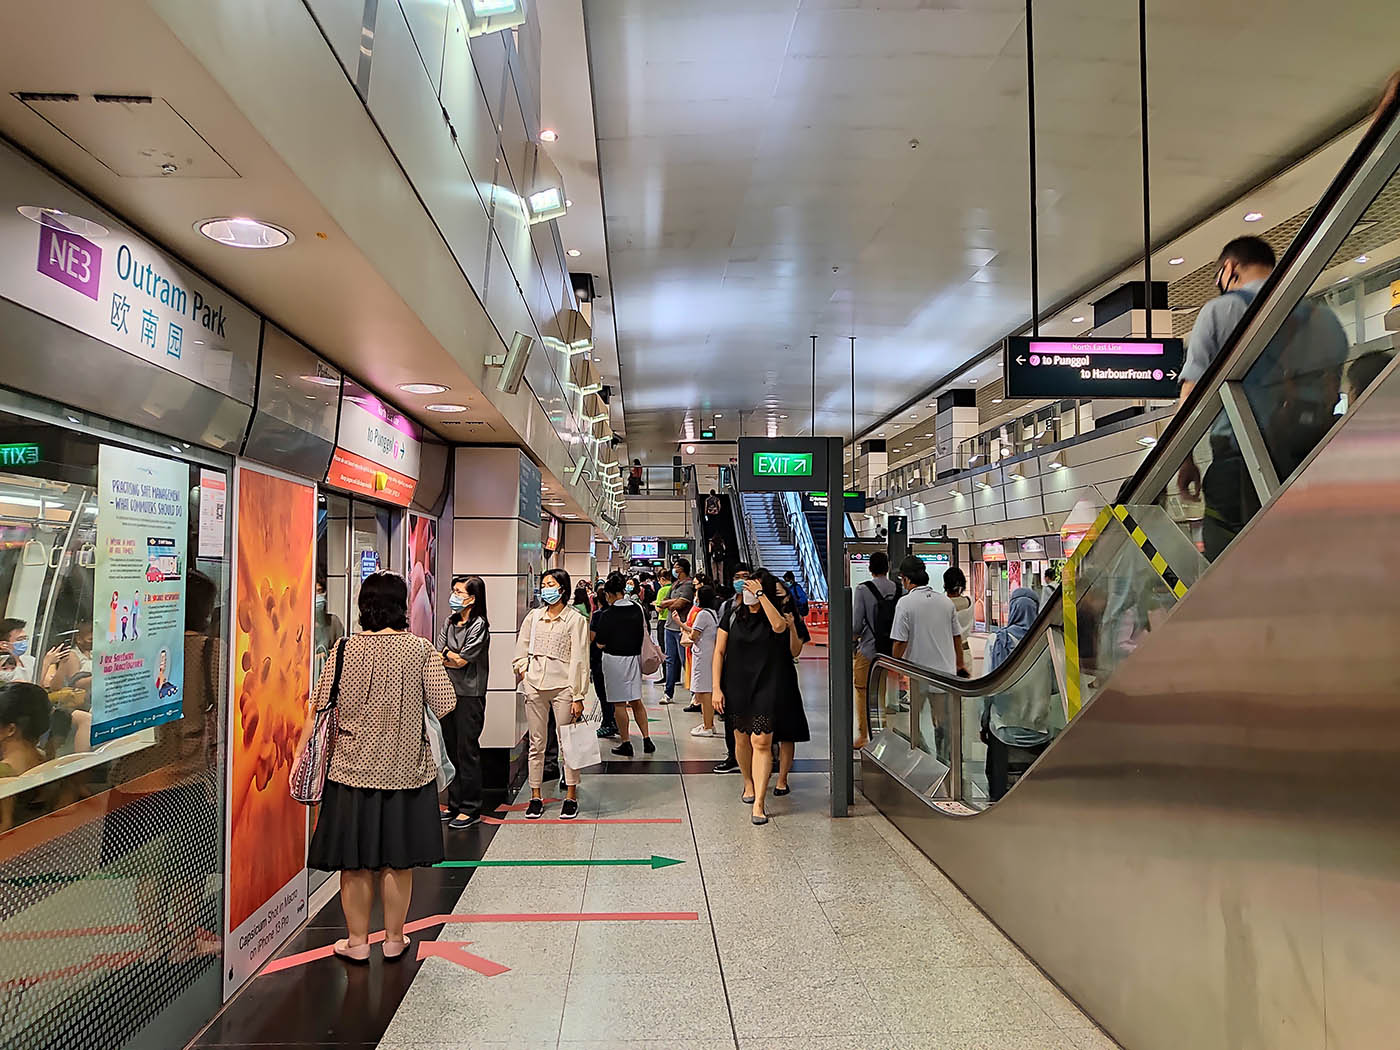 Outram Park MRT Station - - NE3 Platforms